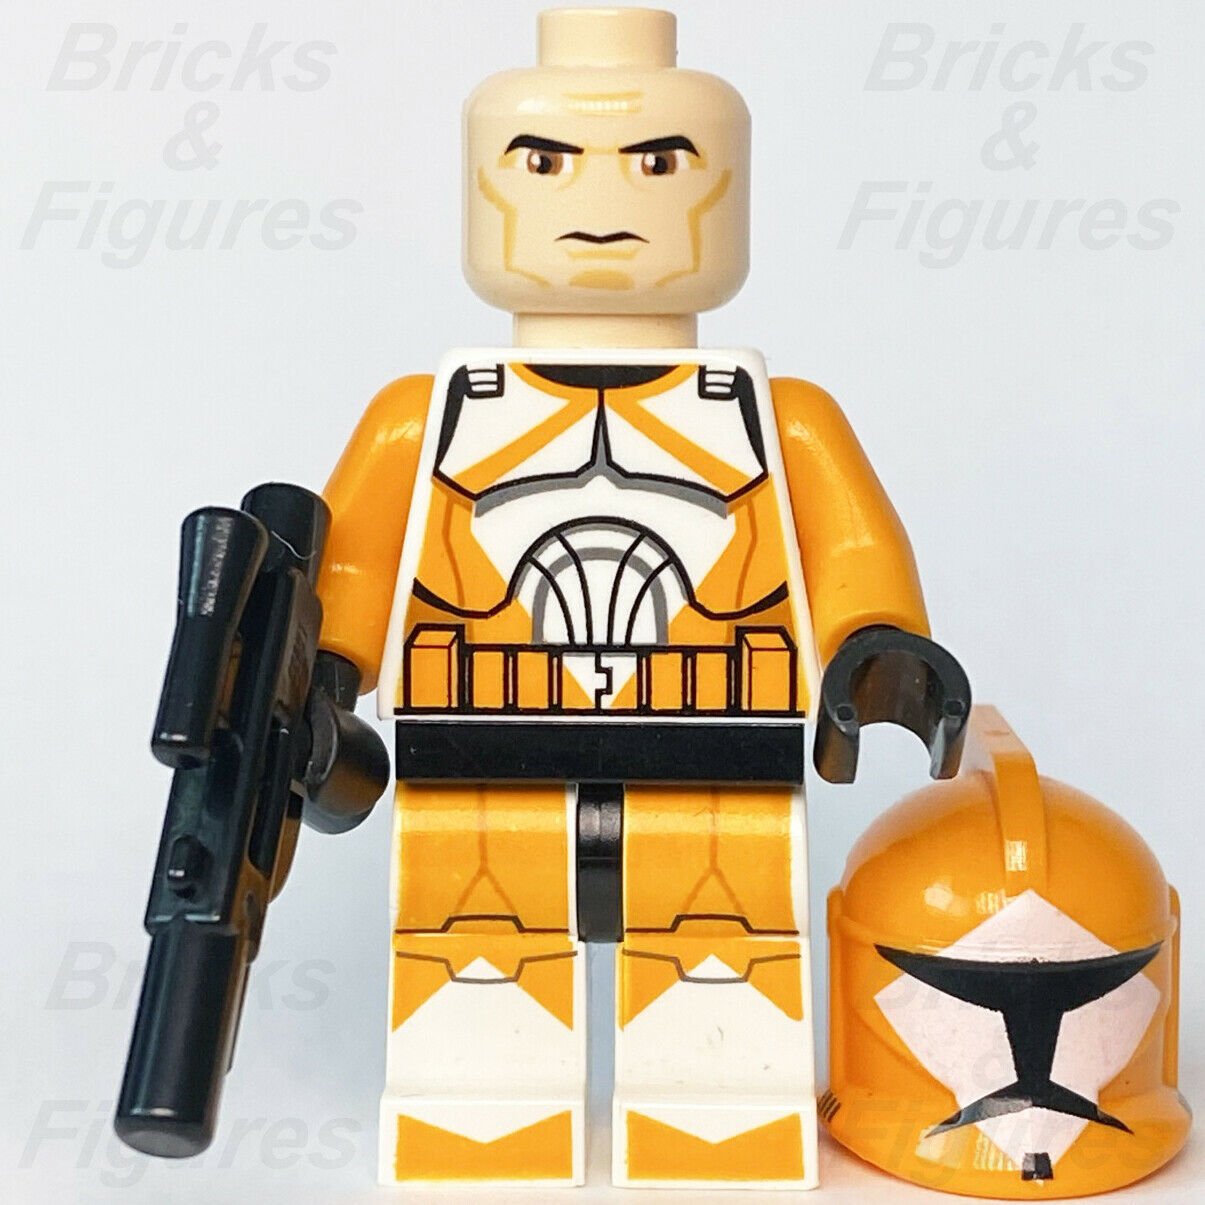 Lego Star Wars Captain Rex Phase 2 Minifigure 75012 w/ Cloth EUC